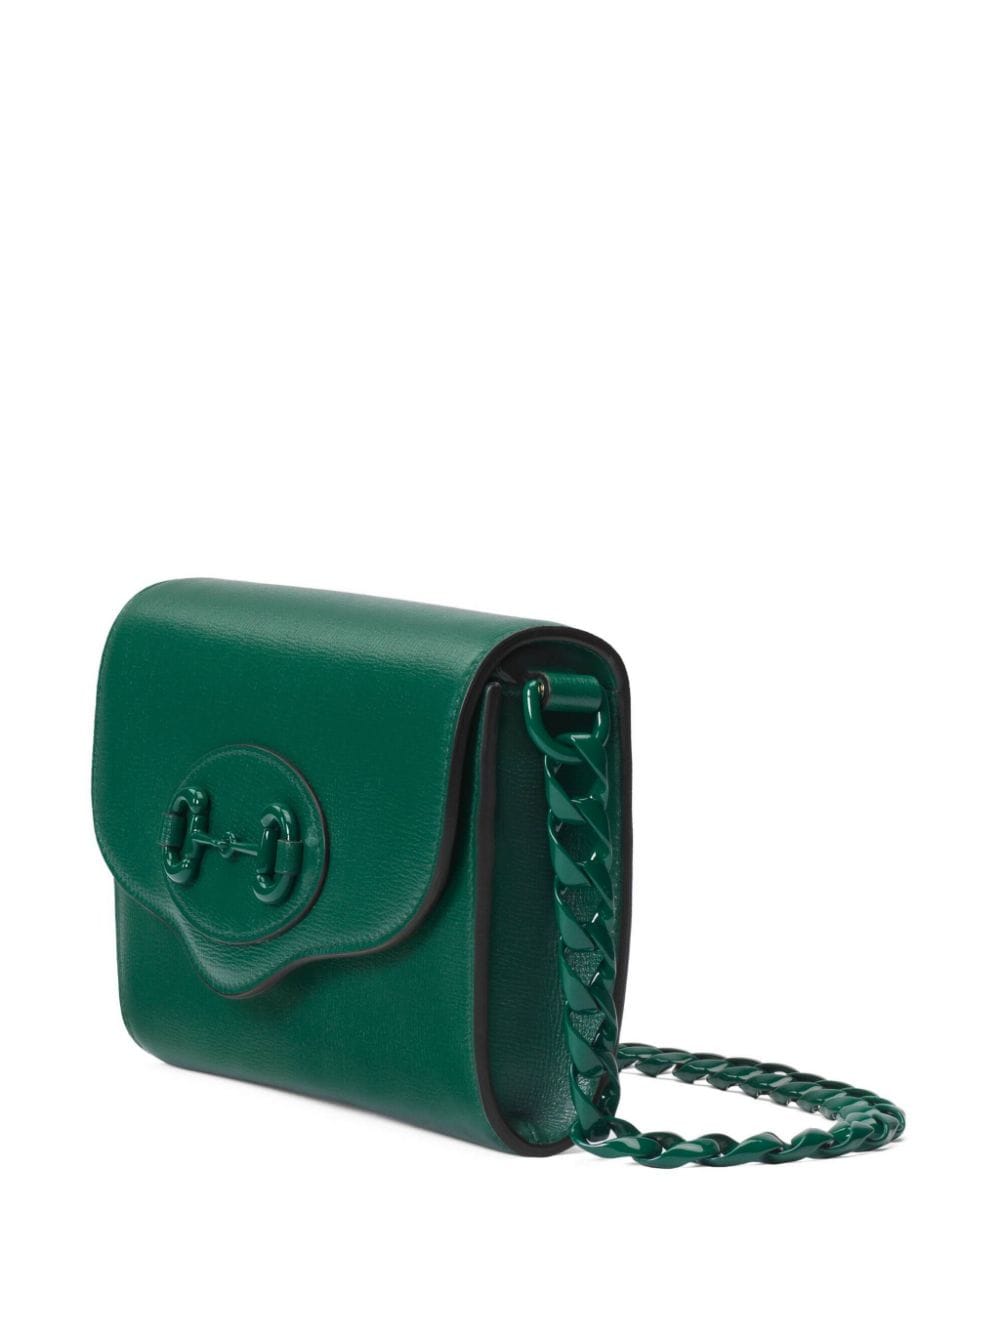 GUCCI Green Leather Horsebit Crossbody Handbag for Women